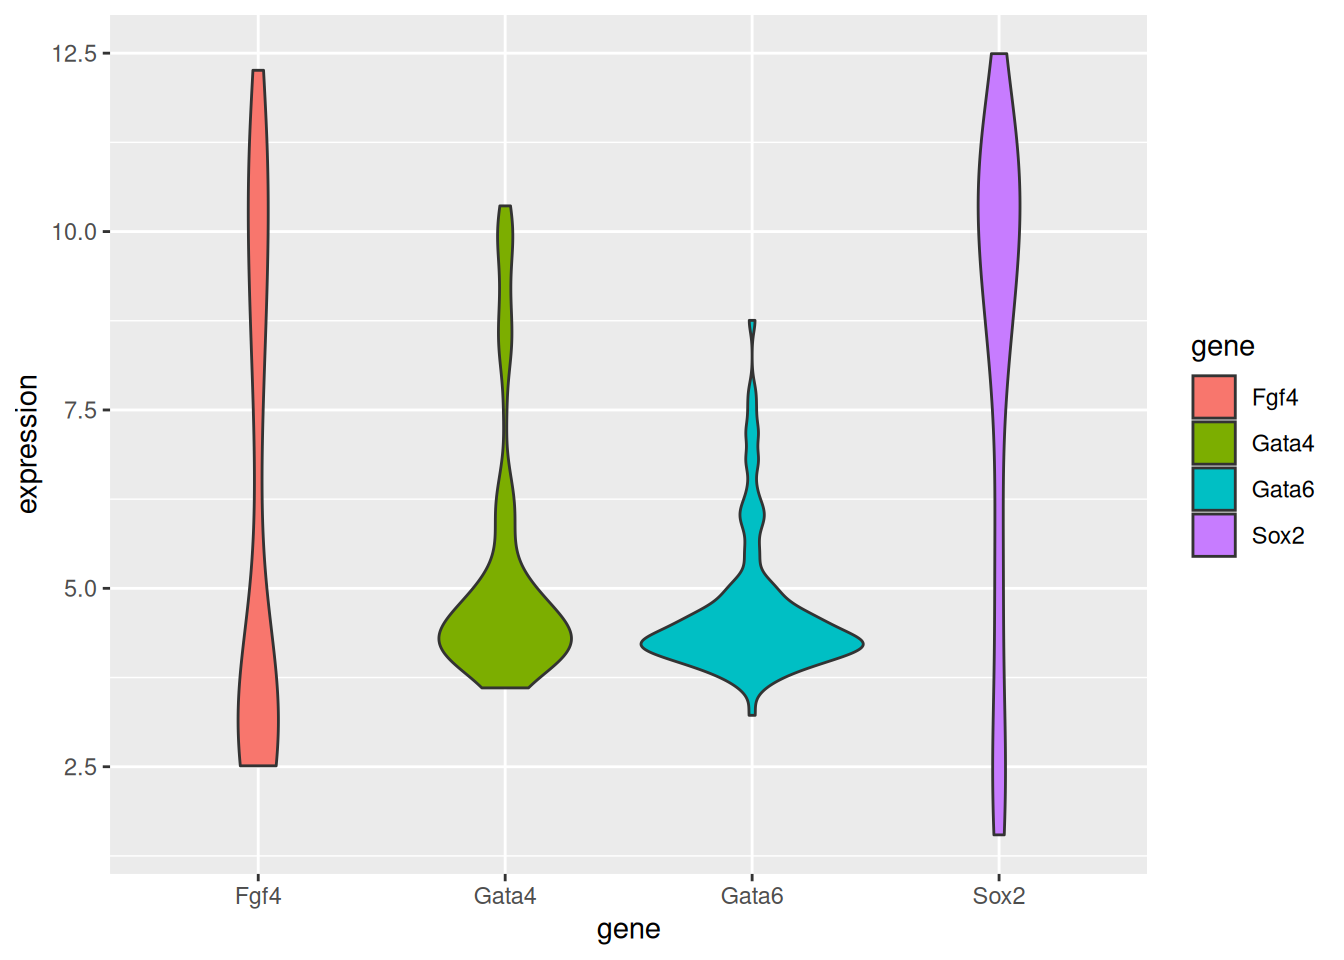 A violin plot of expression values.